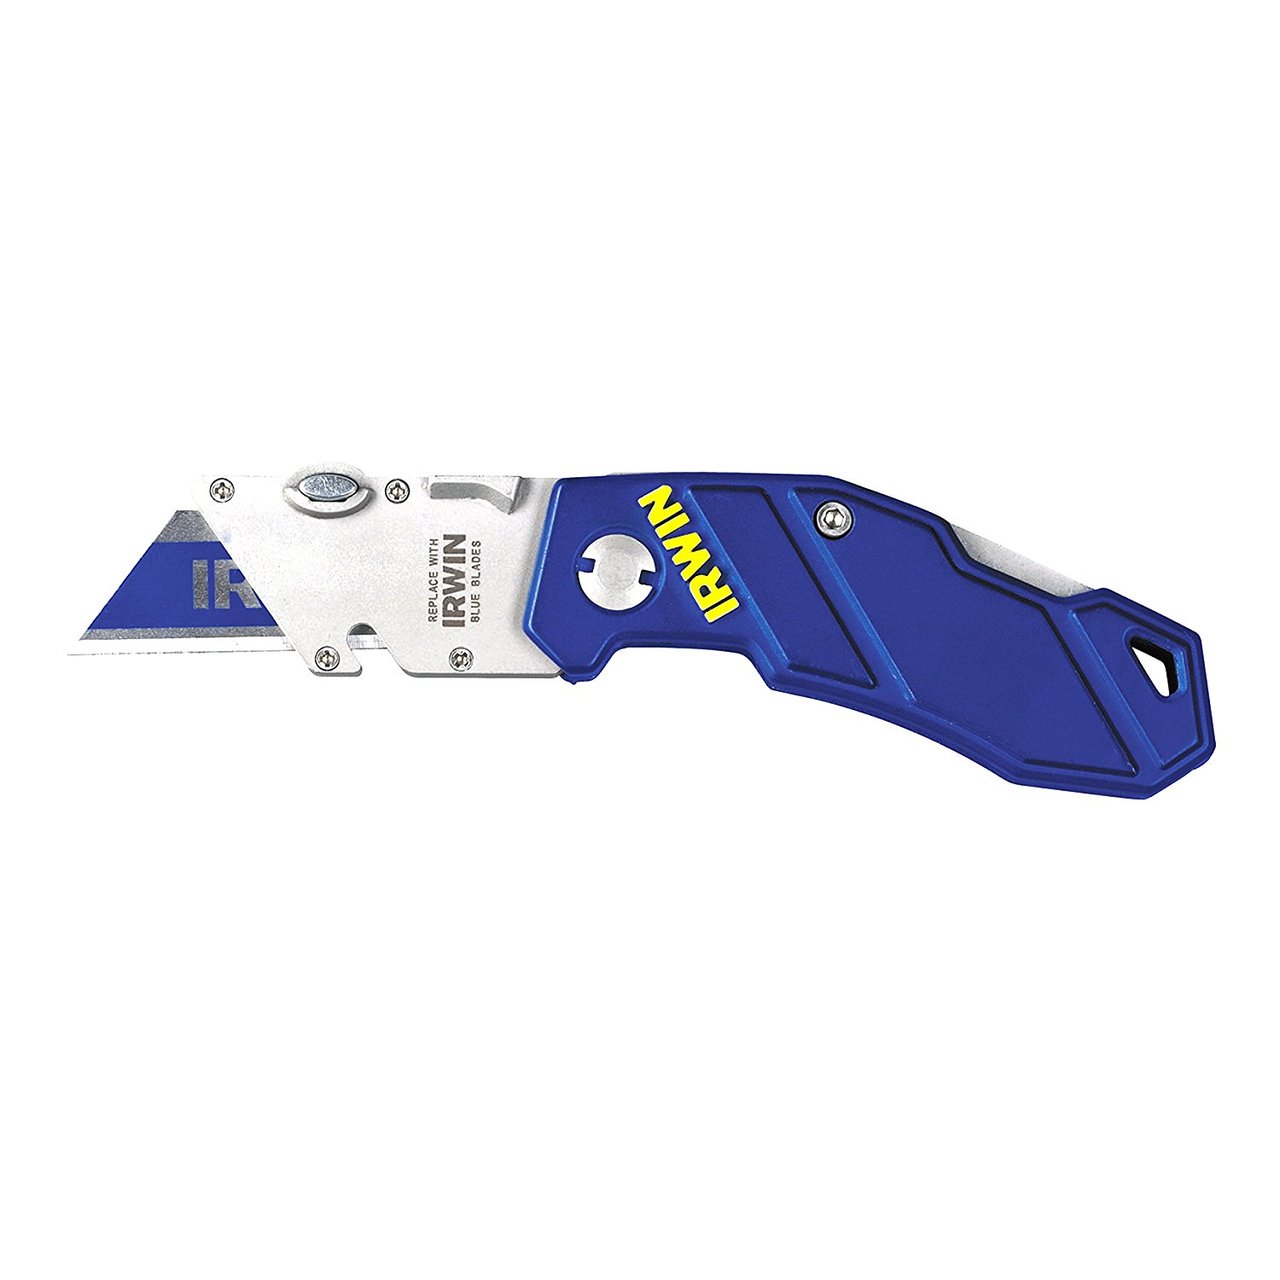 Irwin Folding Utility Knife Box Cutter, 289100